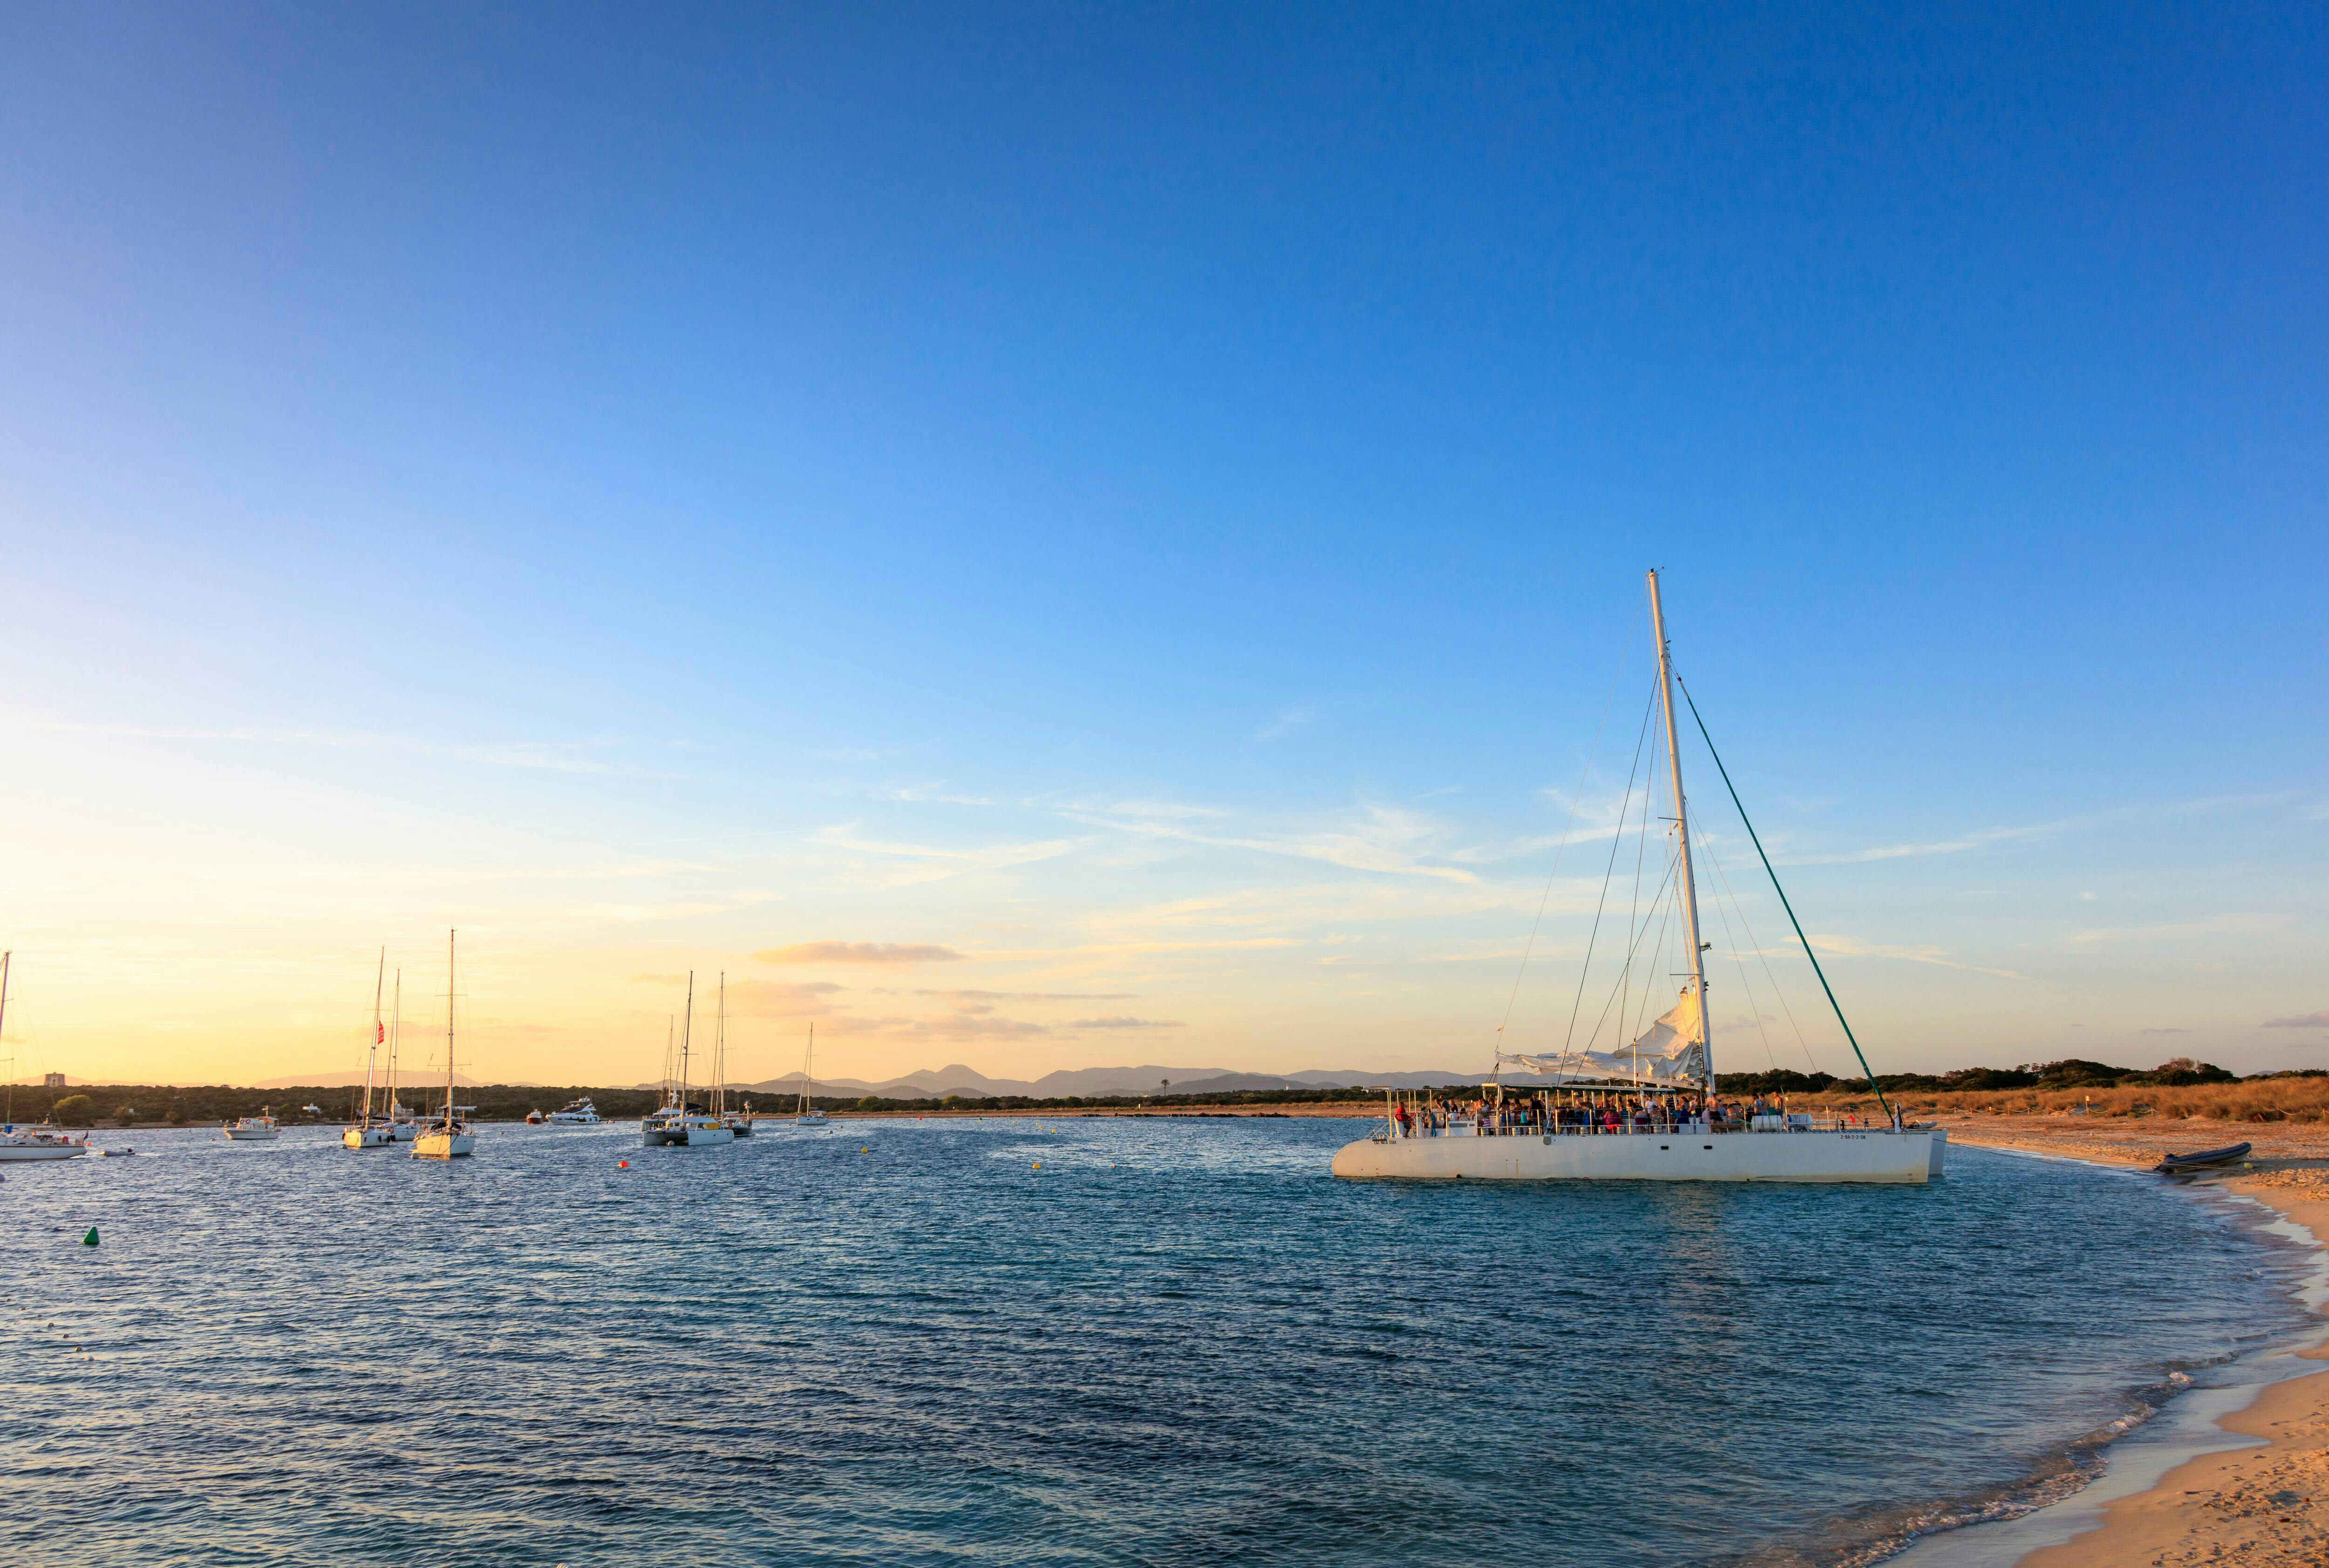 Catamaran Ibiza Sunset – Without Transfer